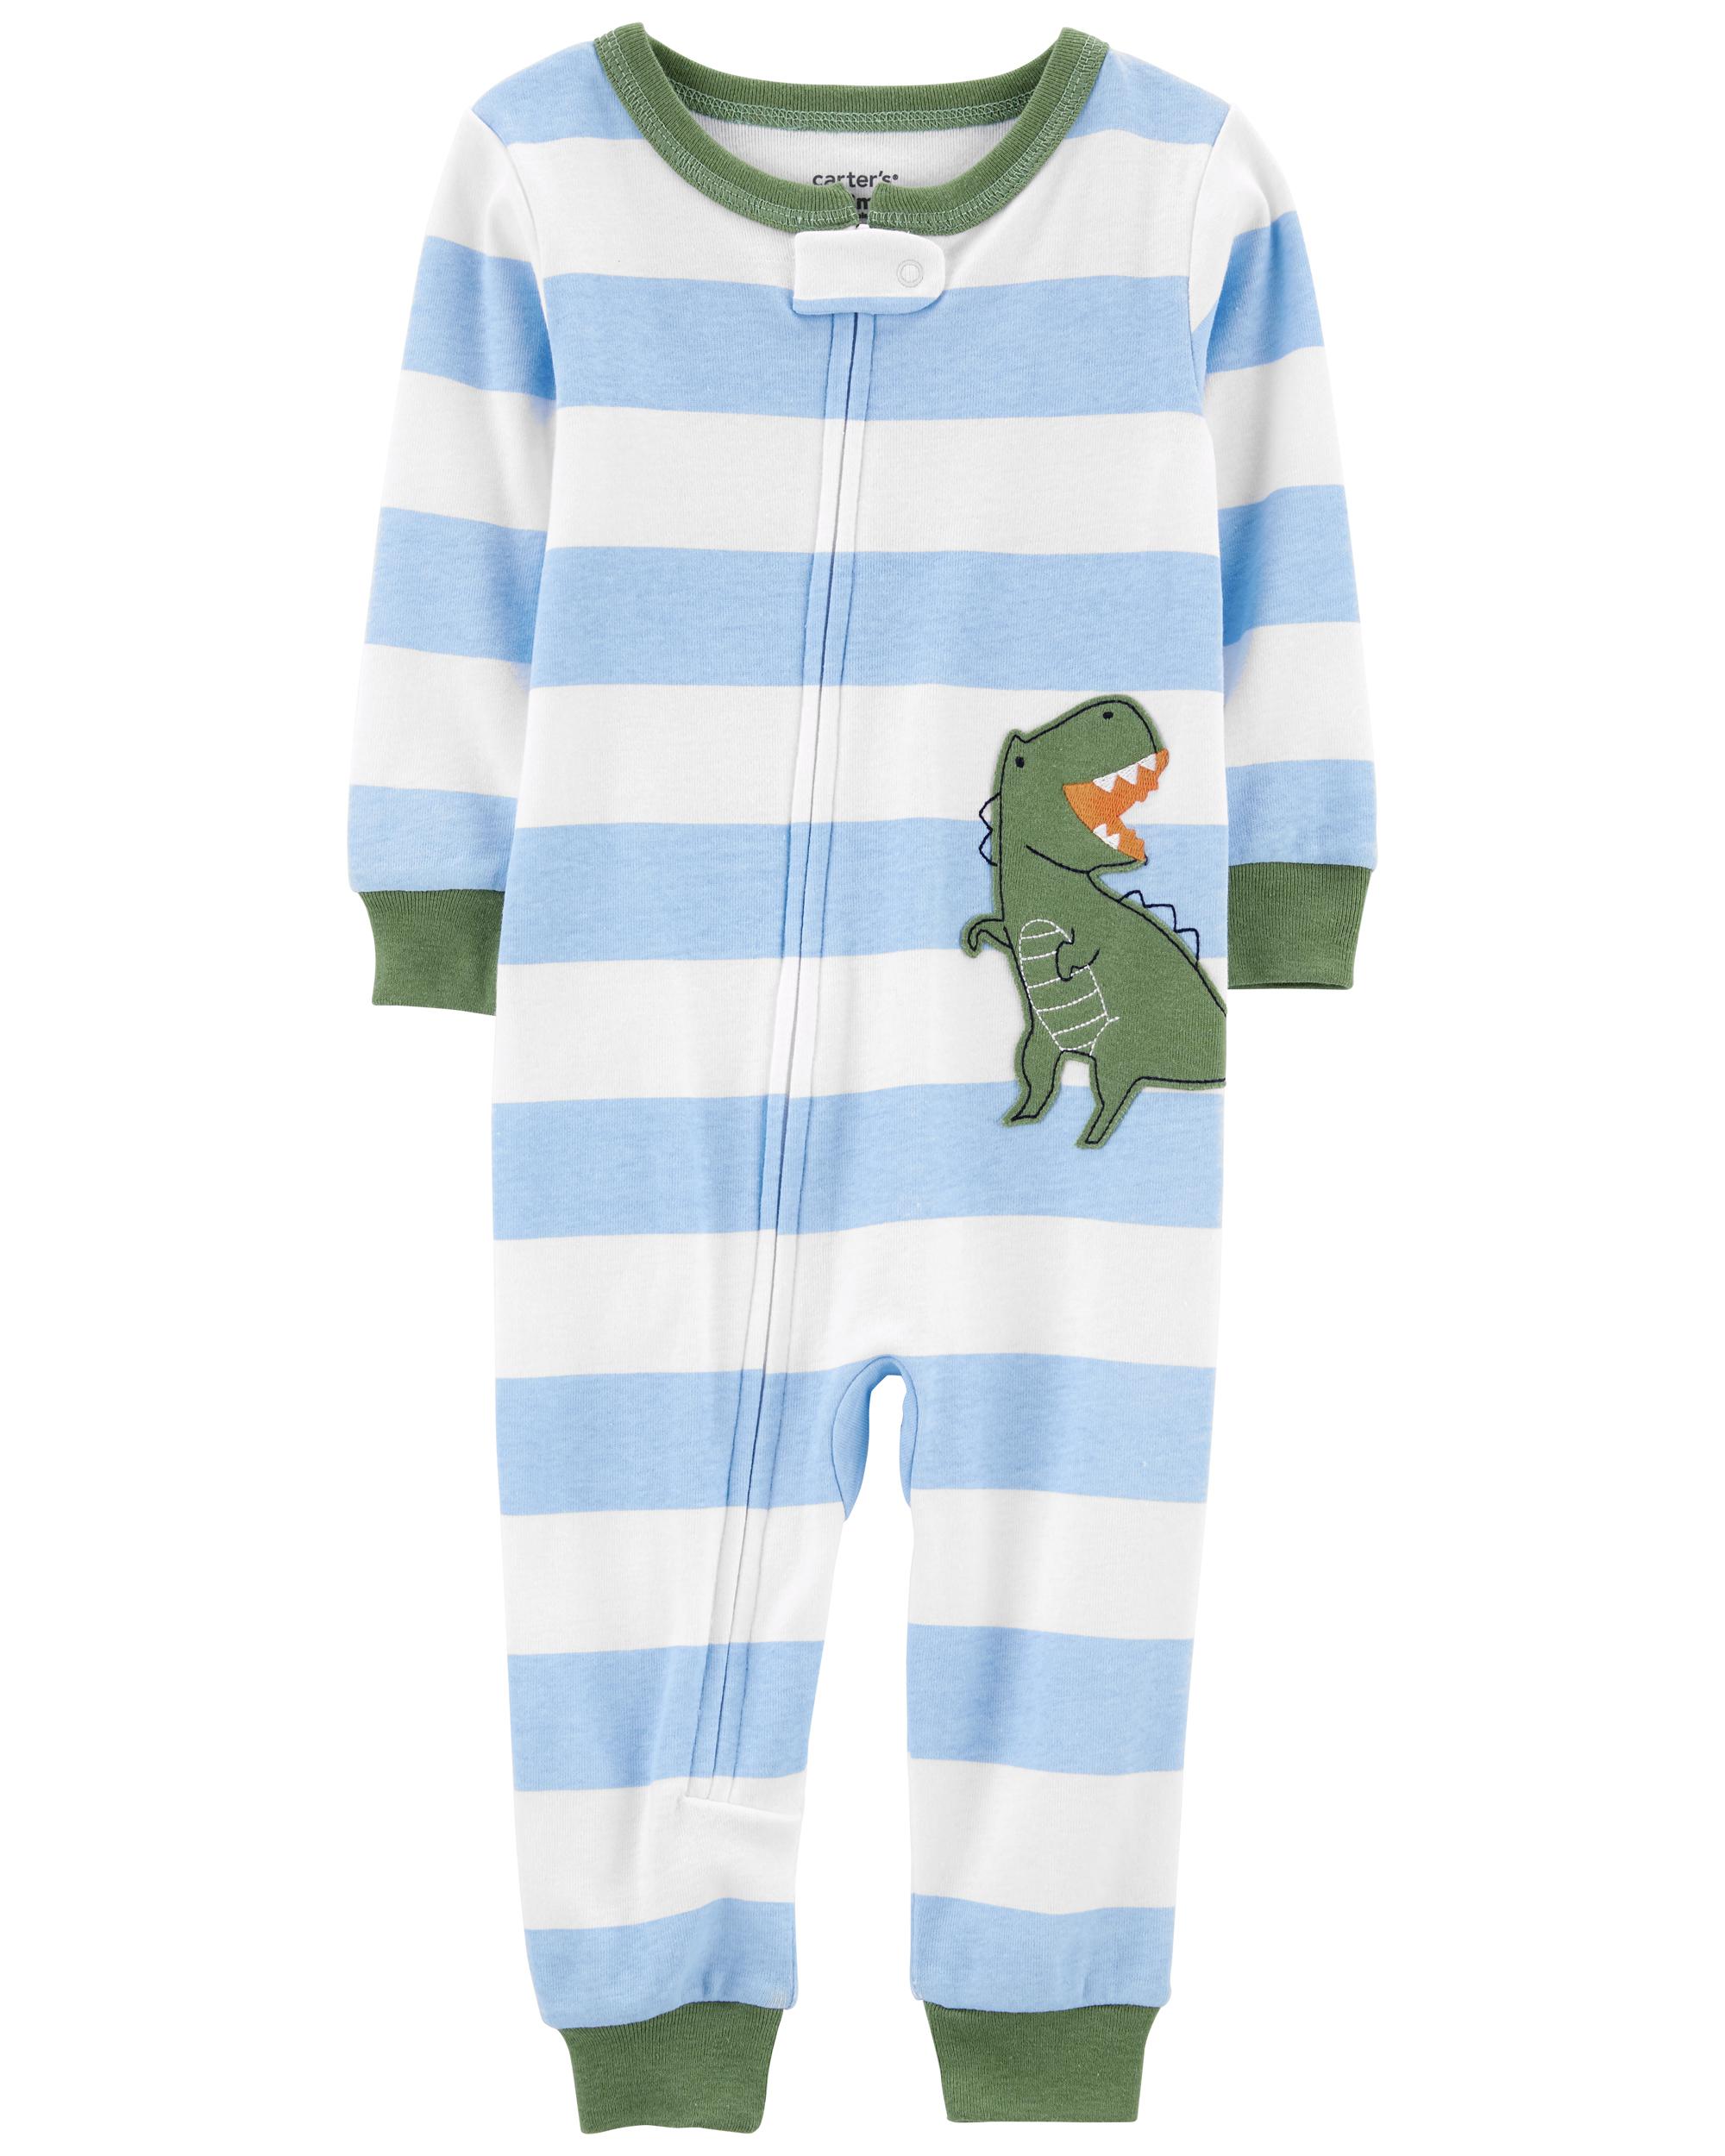 Pjs Cartoon Dinosaur Cotton Pyjamas For Kids Christmas Family Sleepwear For  Boys And Girls 210915 From Cong05, $7.78